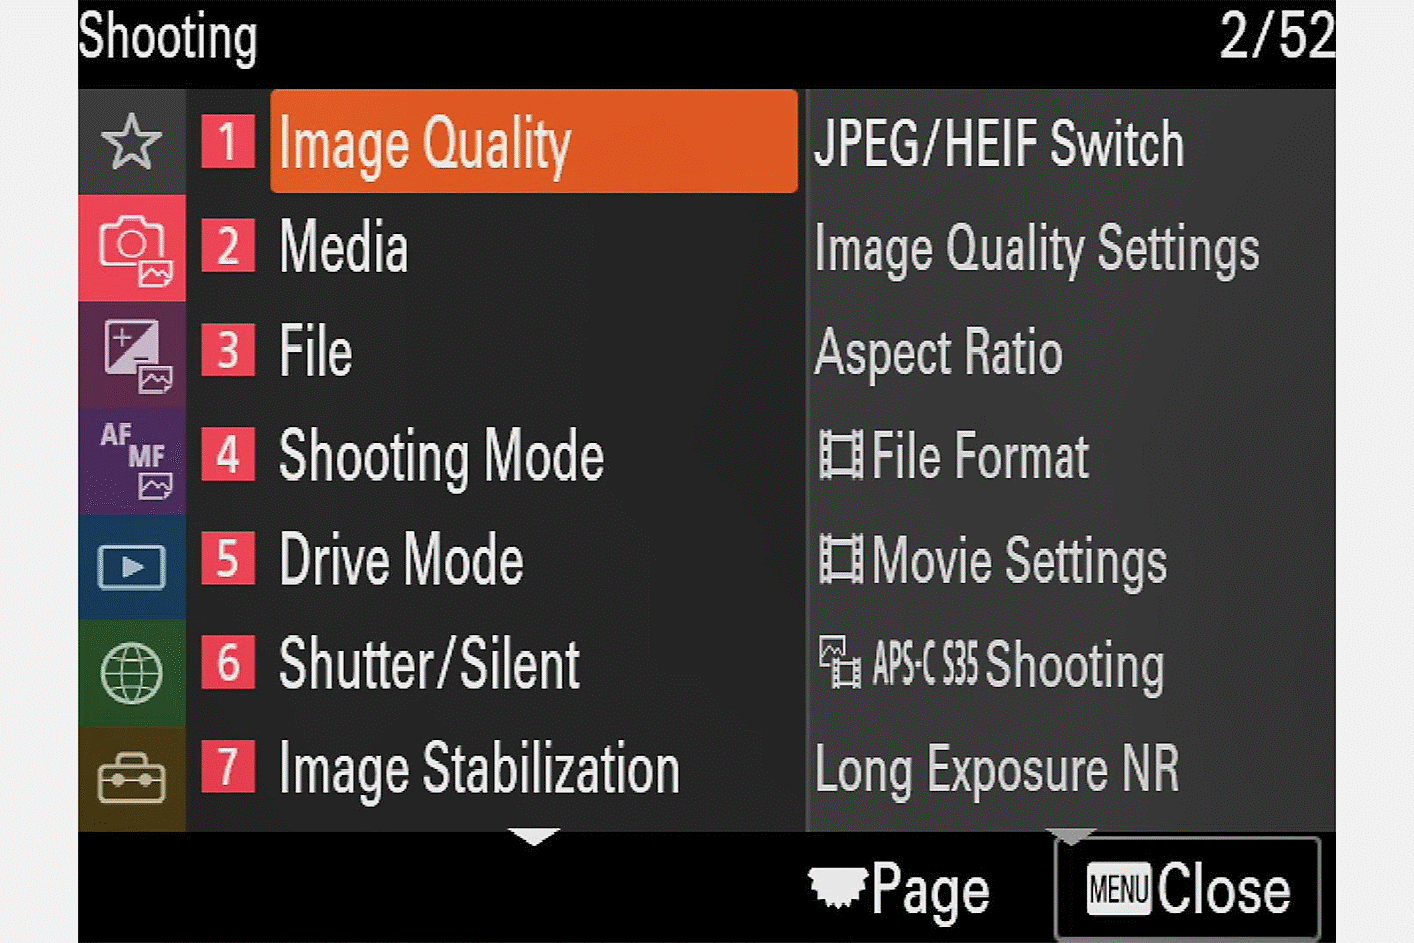 "Shooting" menu with cursor on "Image Quality"